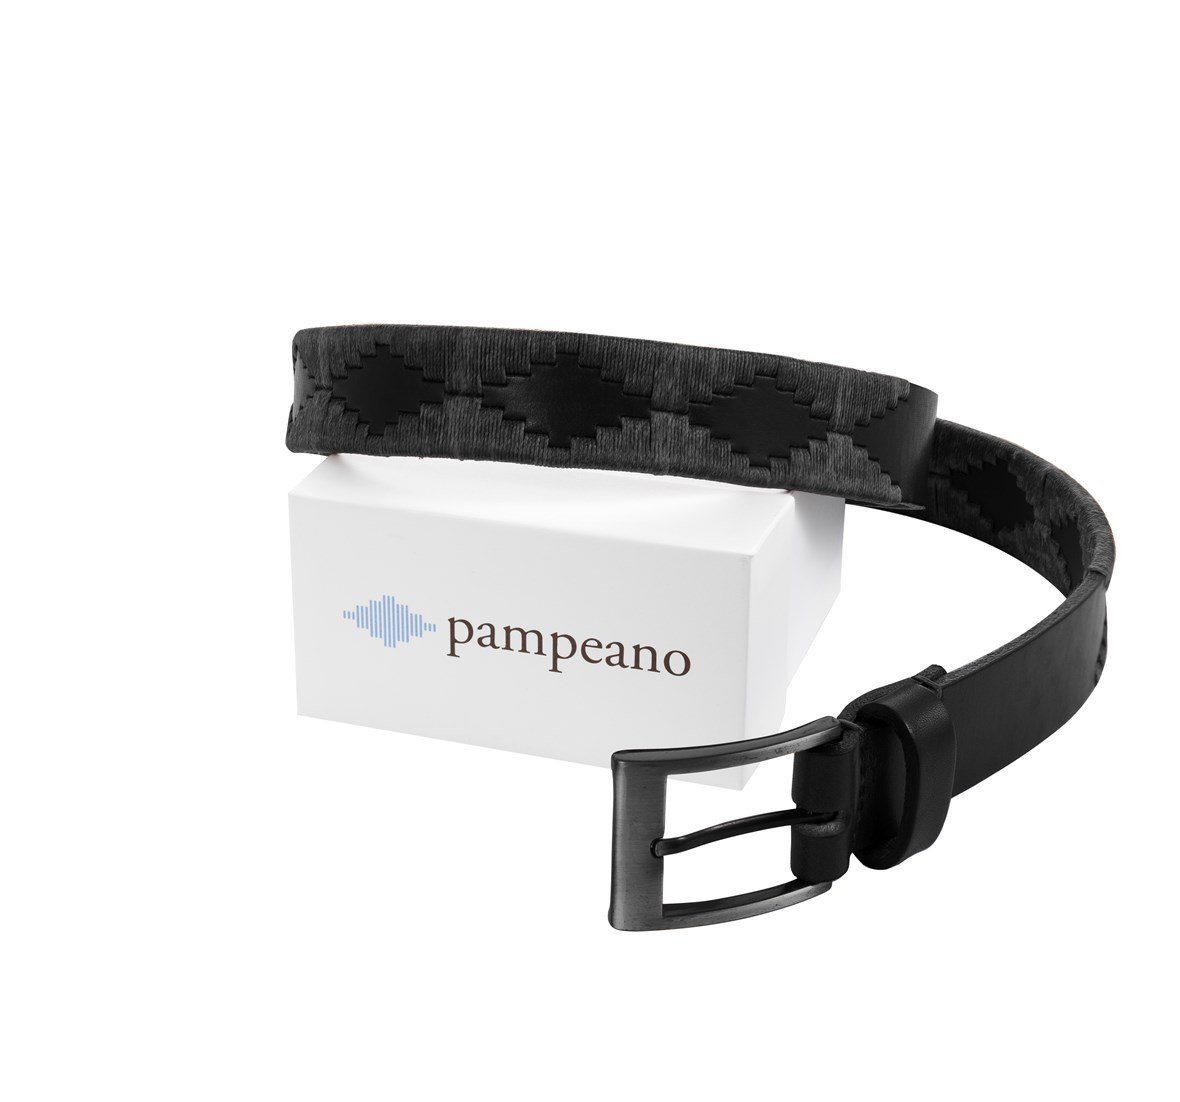 PAMPEANO - POLO BELT | Black Label Edition - HANSEN Garments